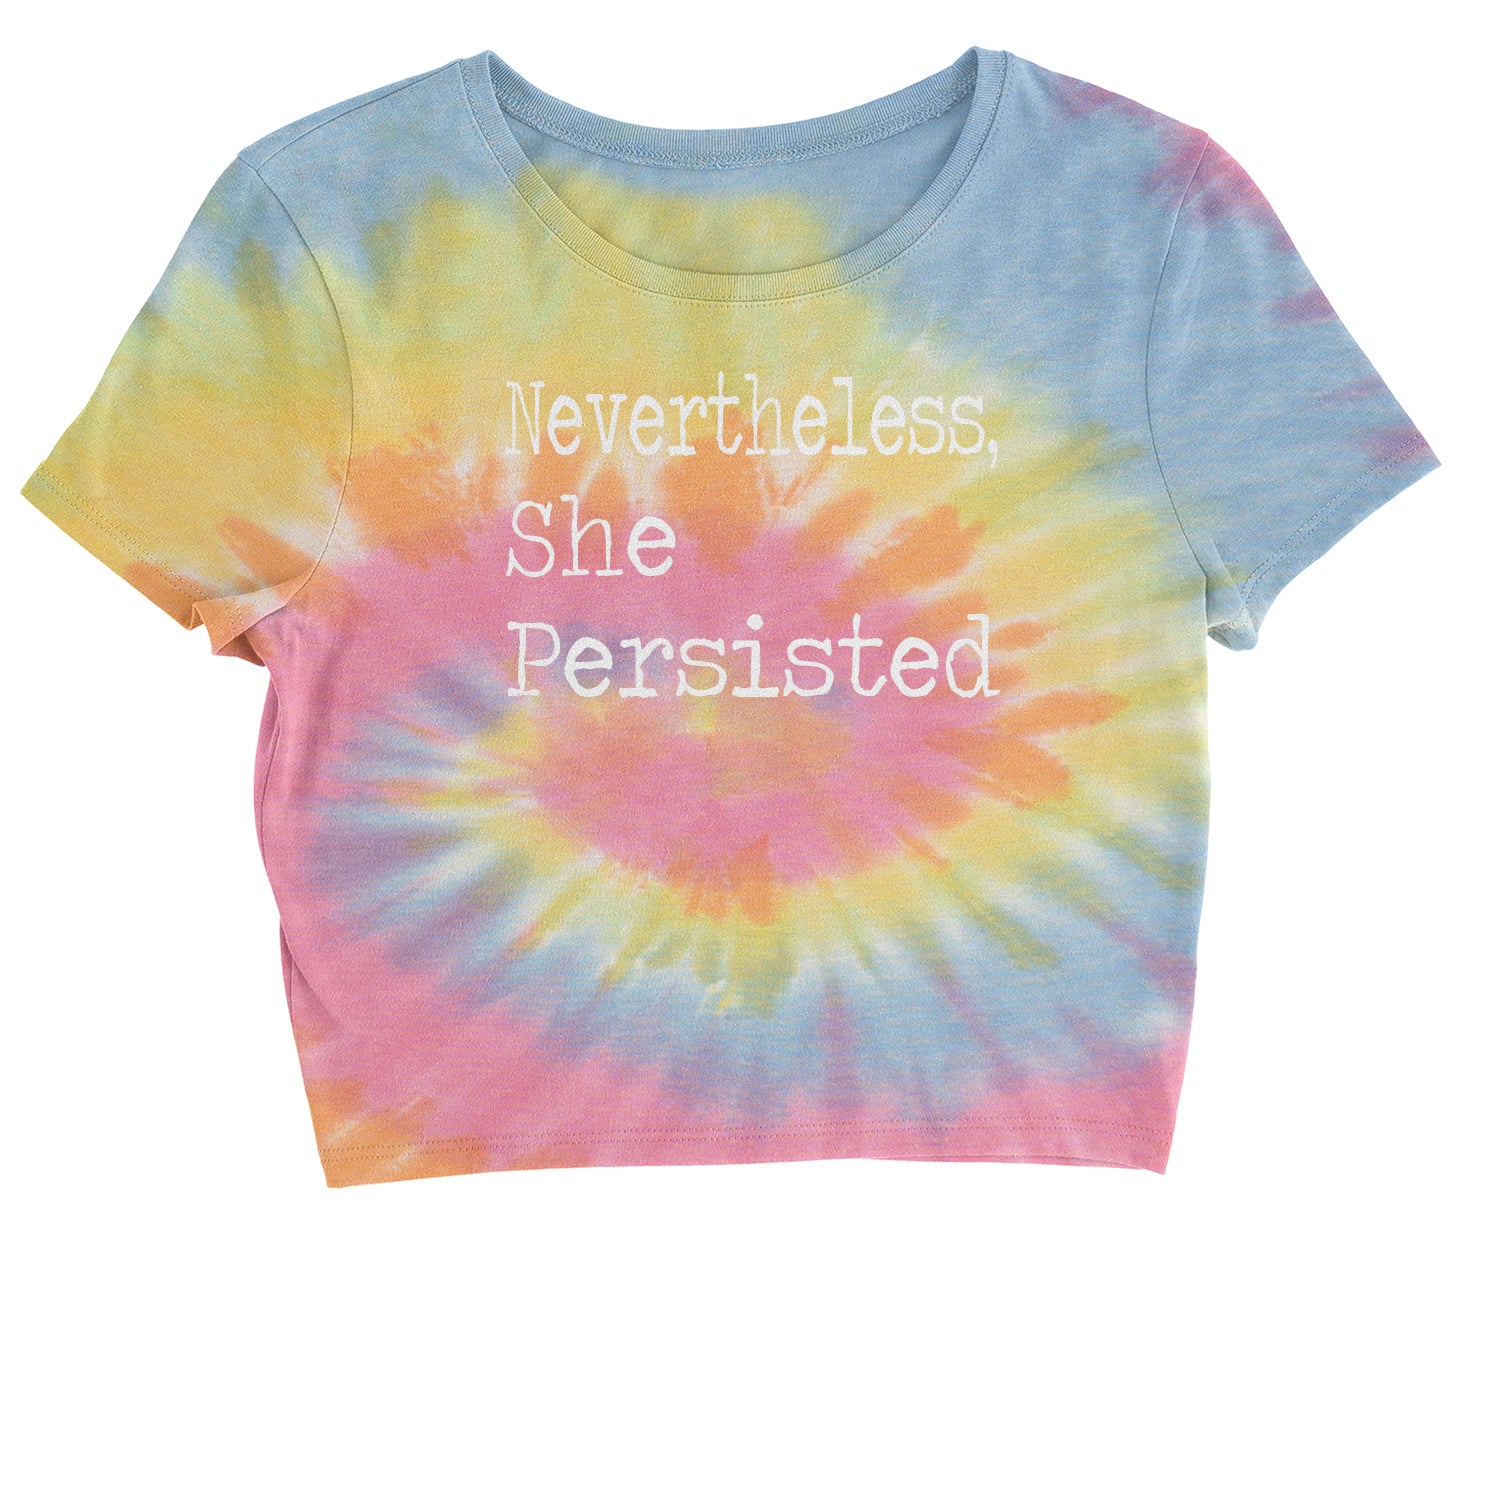 Nevertheless, She Persisted Cropped T-Shirt 2020, feminism, feminist, kamala, letlizspeak, mamala, mcconnell, mitch, momala, mommala by Expression Tees